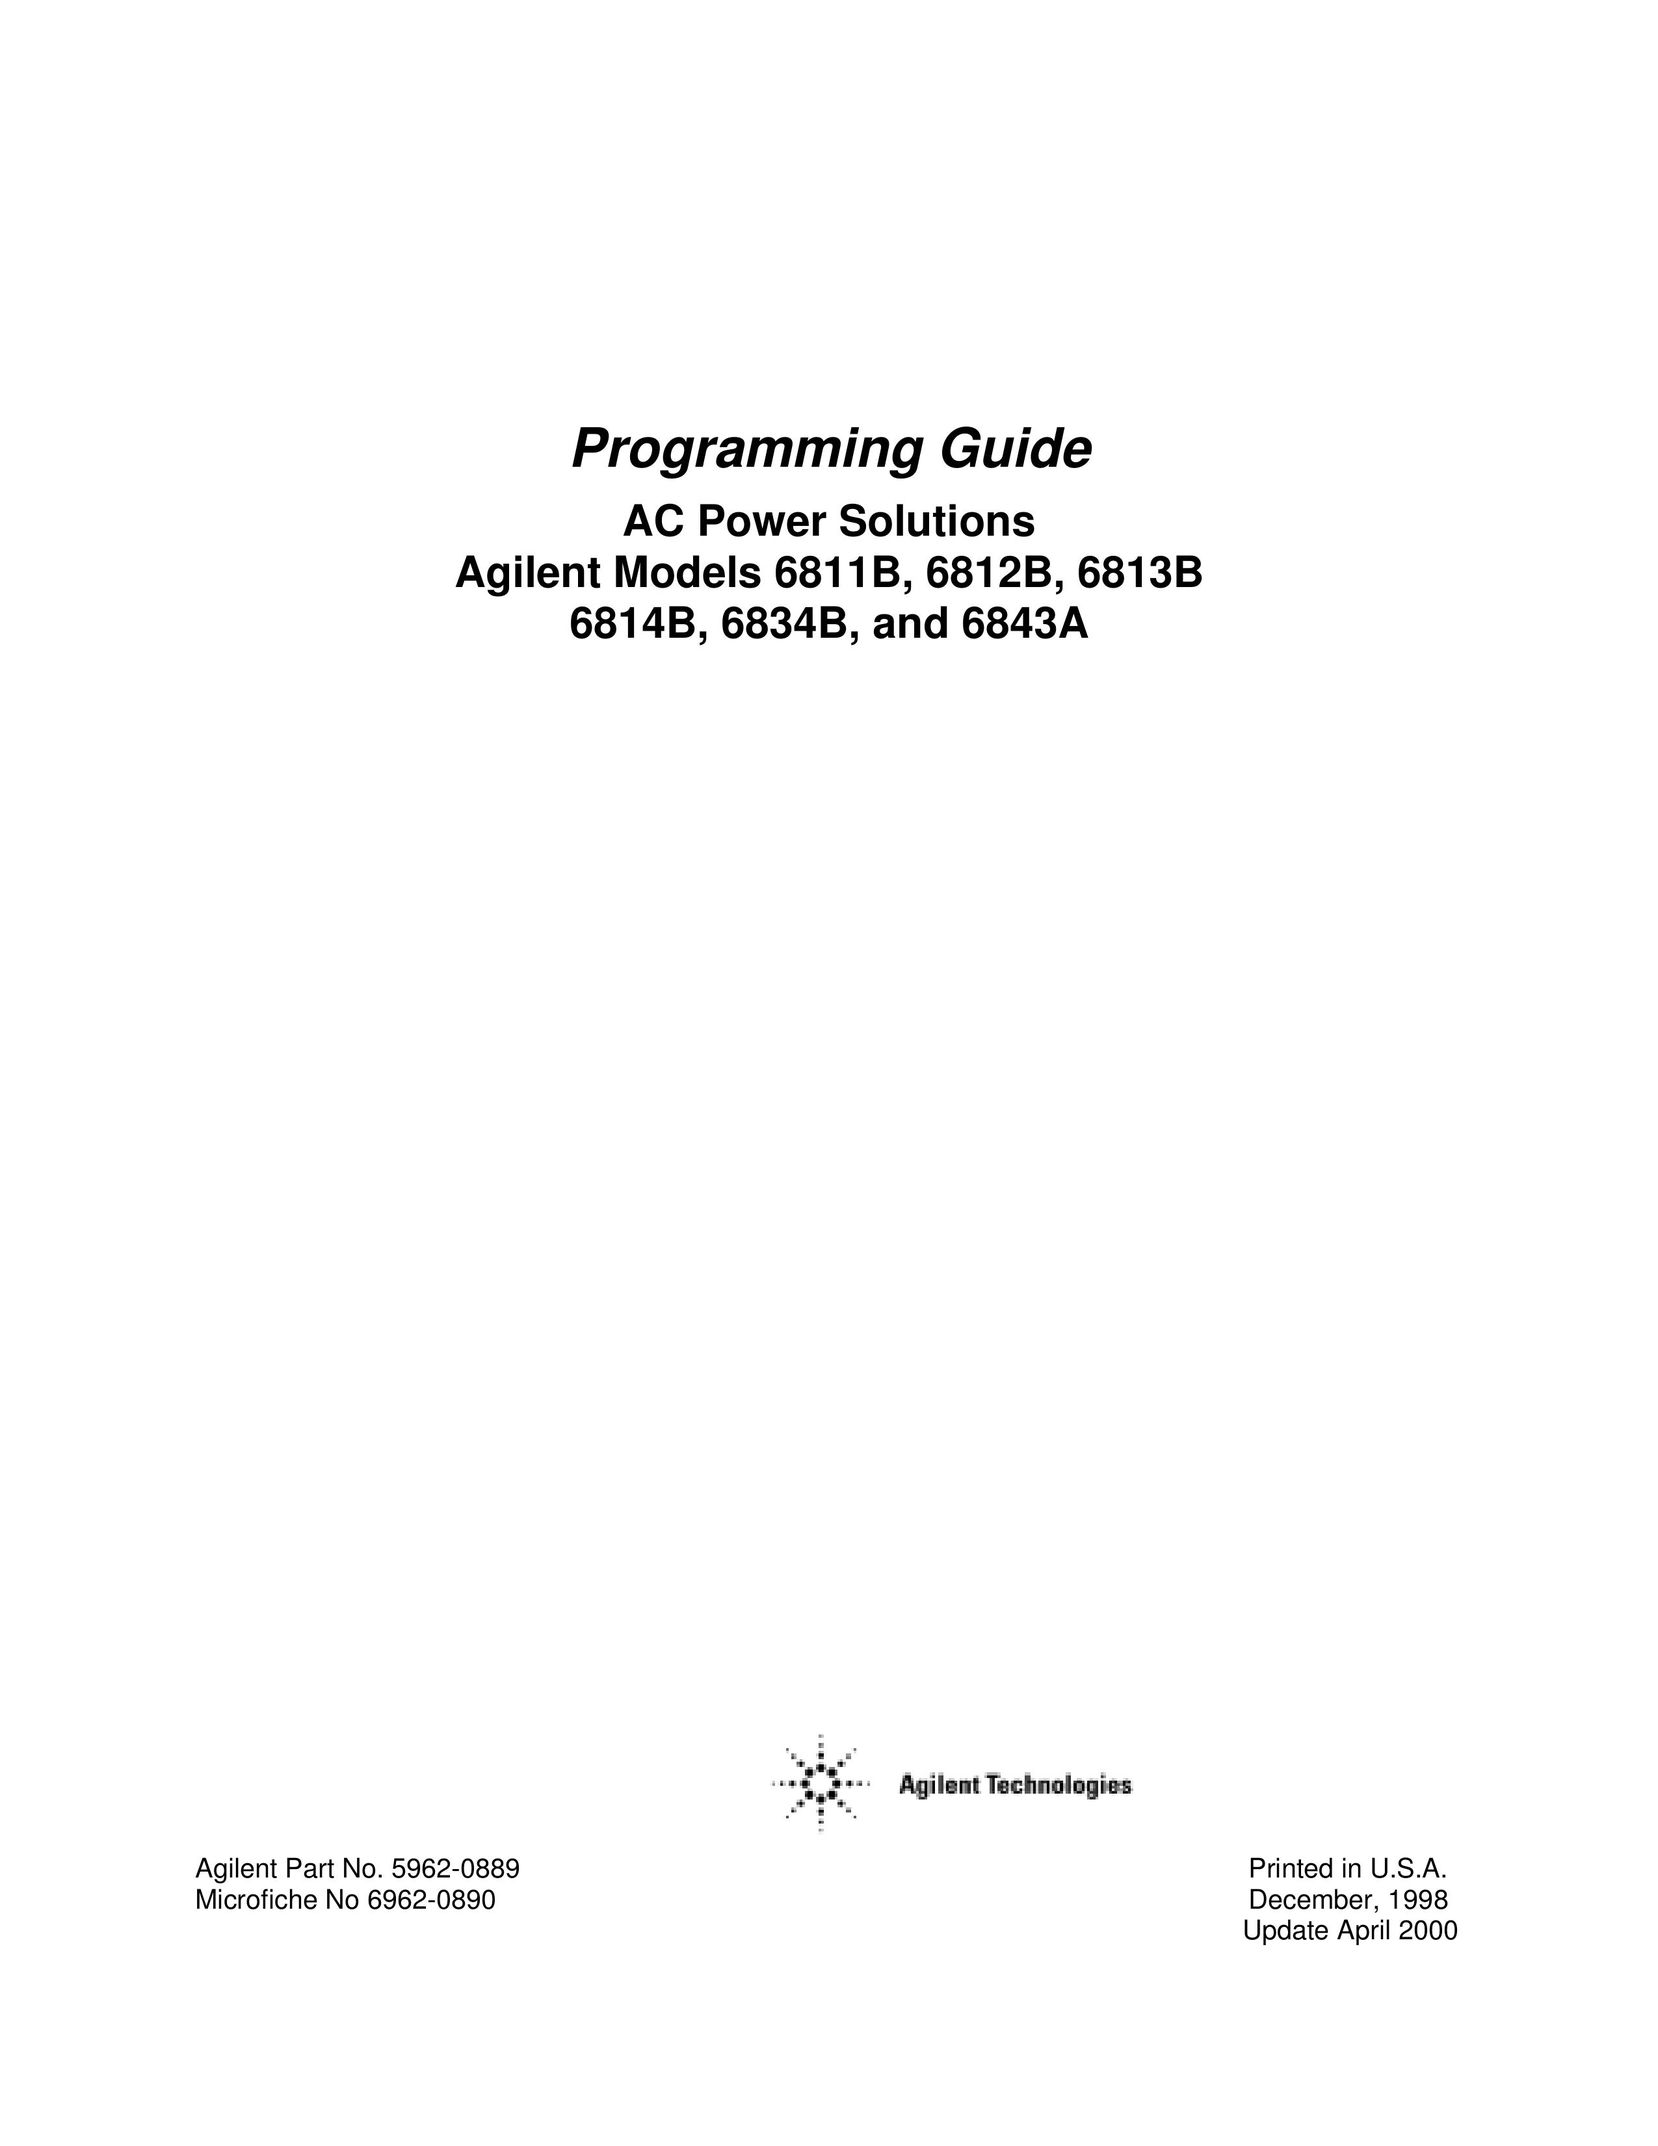 Agilent Technologies 6814B Welding System User Manual